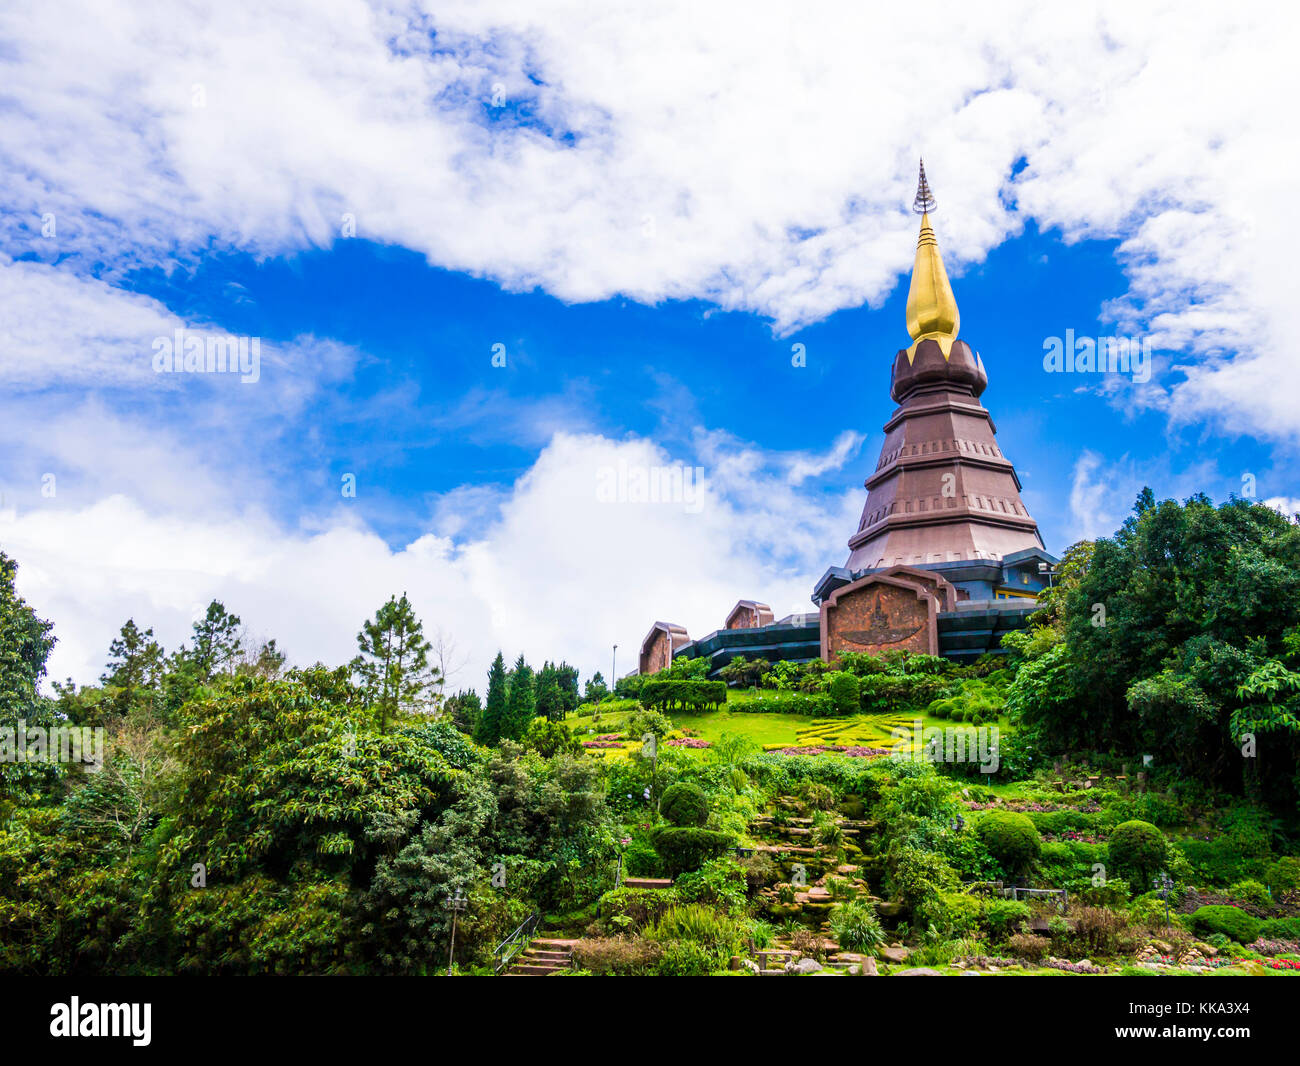 Pagoda and royal garden on the top of Doi Inthanon, Thailand Stock Photo